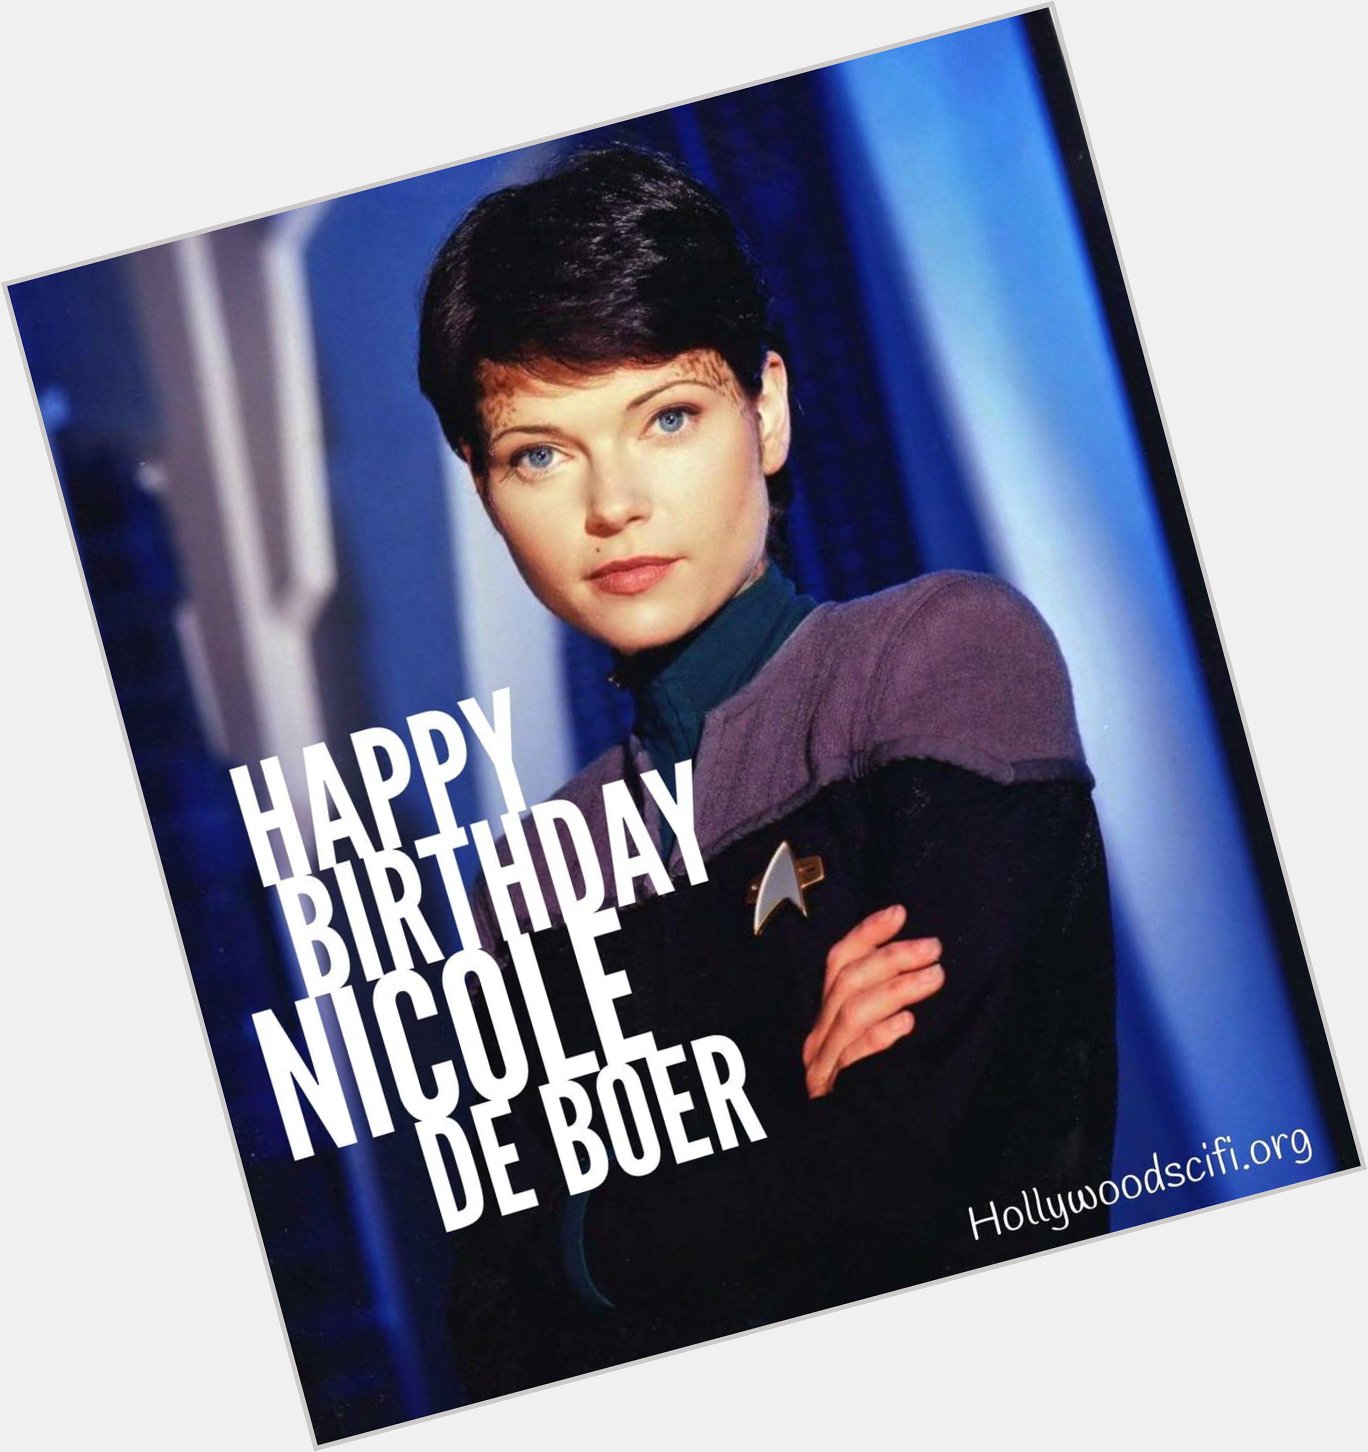 Wishing Nicole de Boer  Happy Birthday! She played Ezri Dax on  